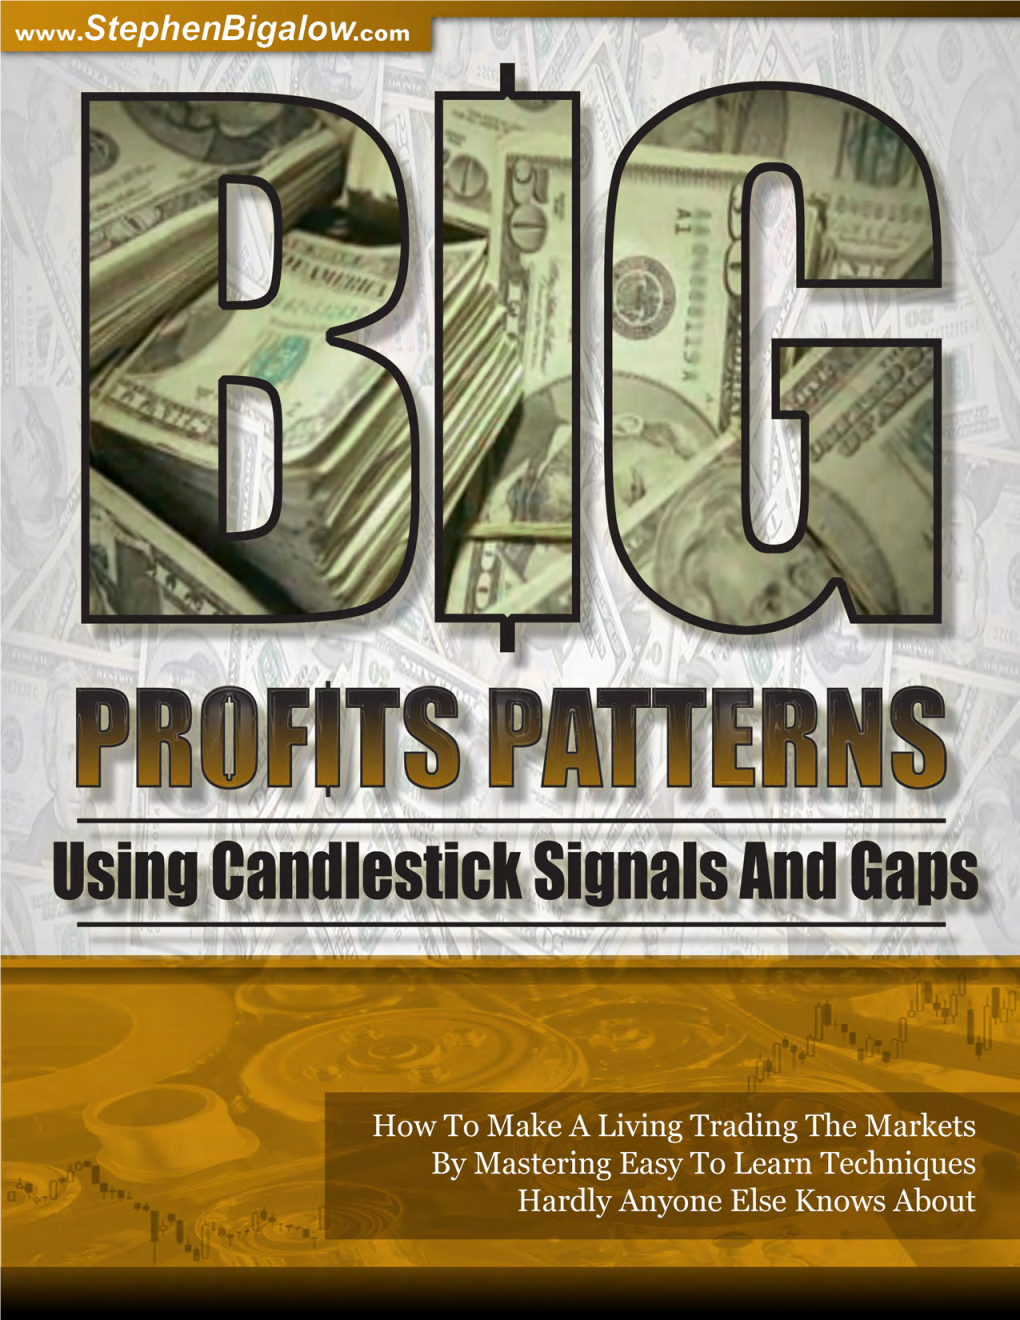 Big Profit Patterns Using Candlestick Signals and Gaps”